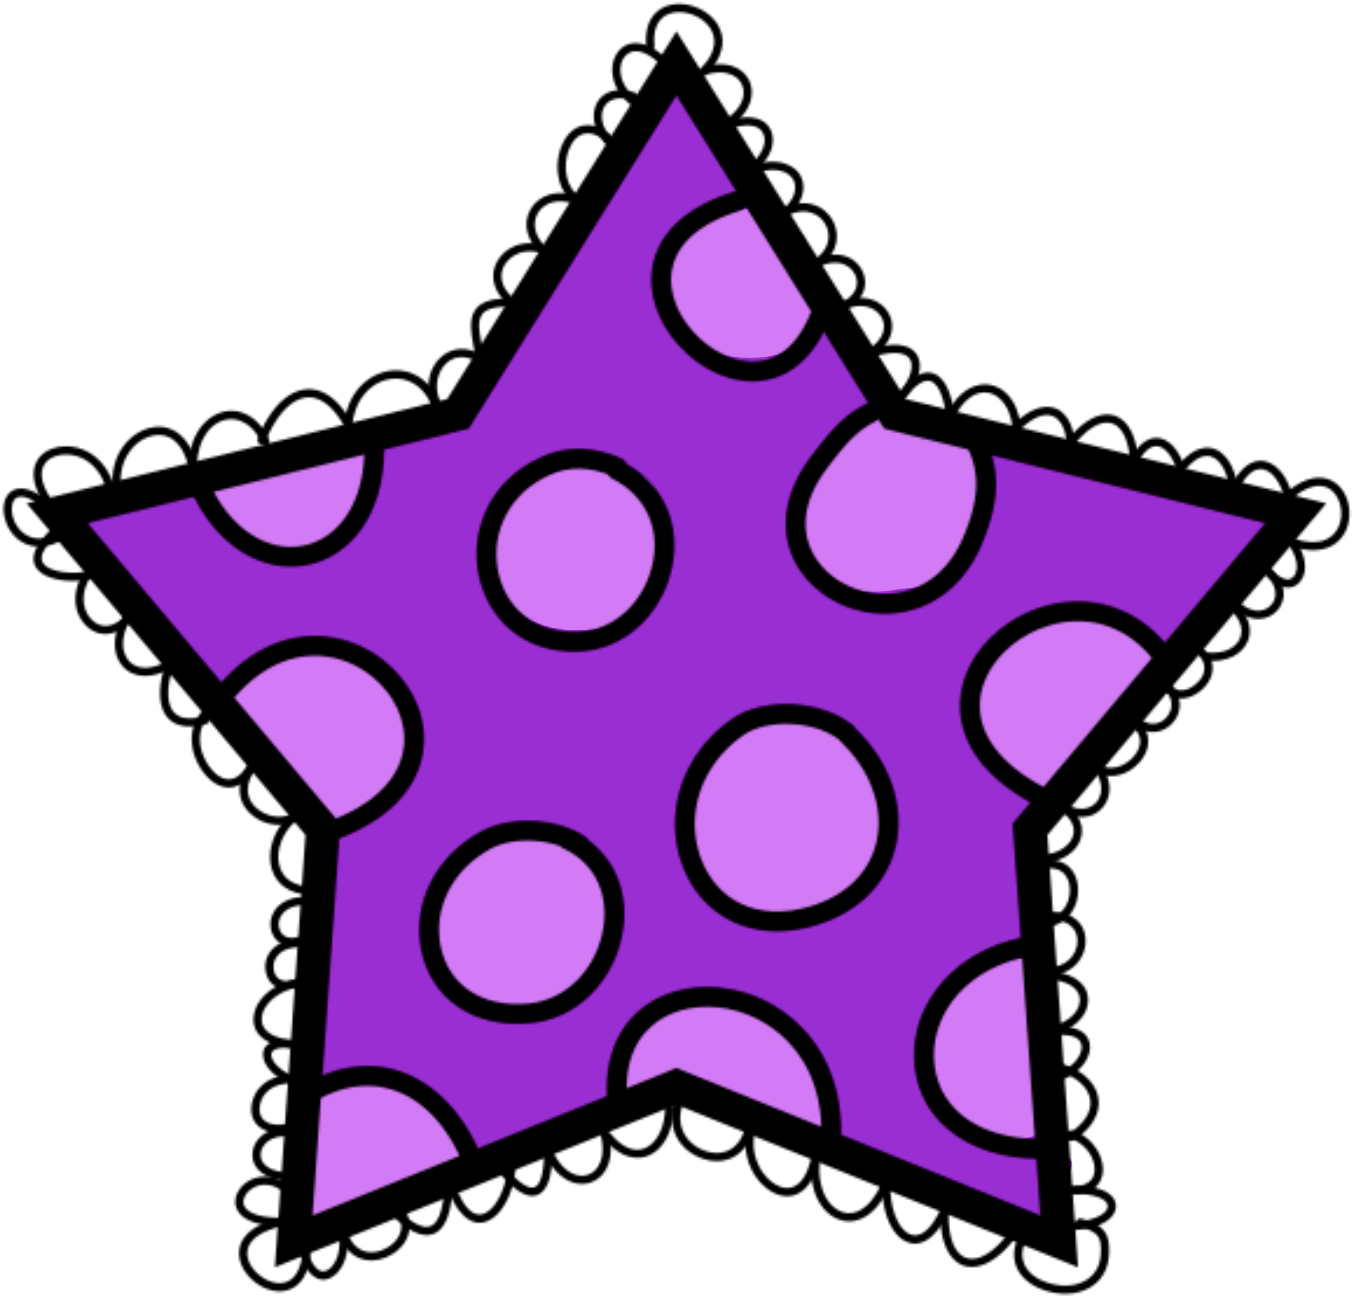 Stars With Polka Dots (1422x1402)